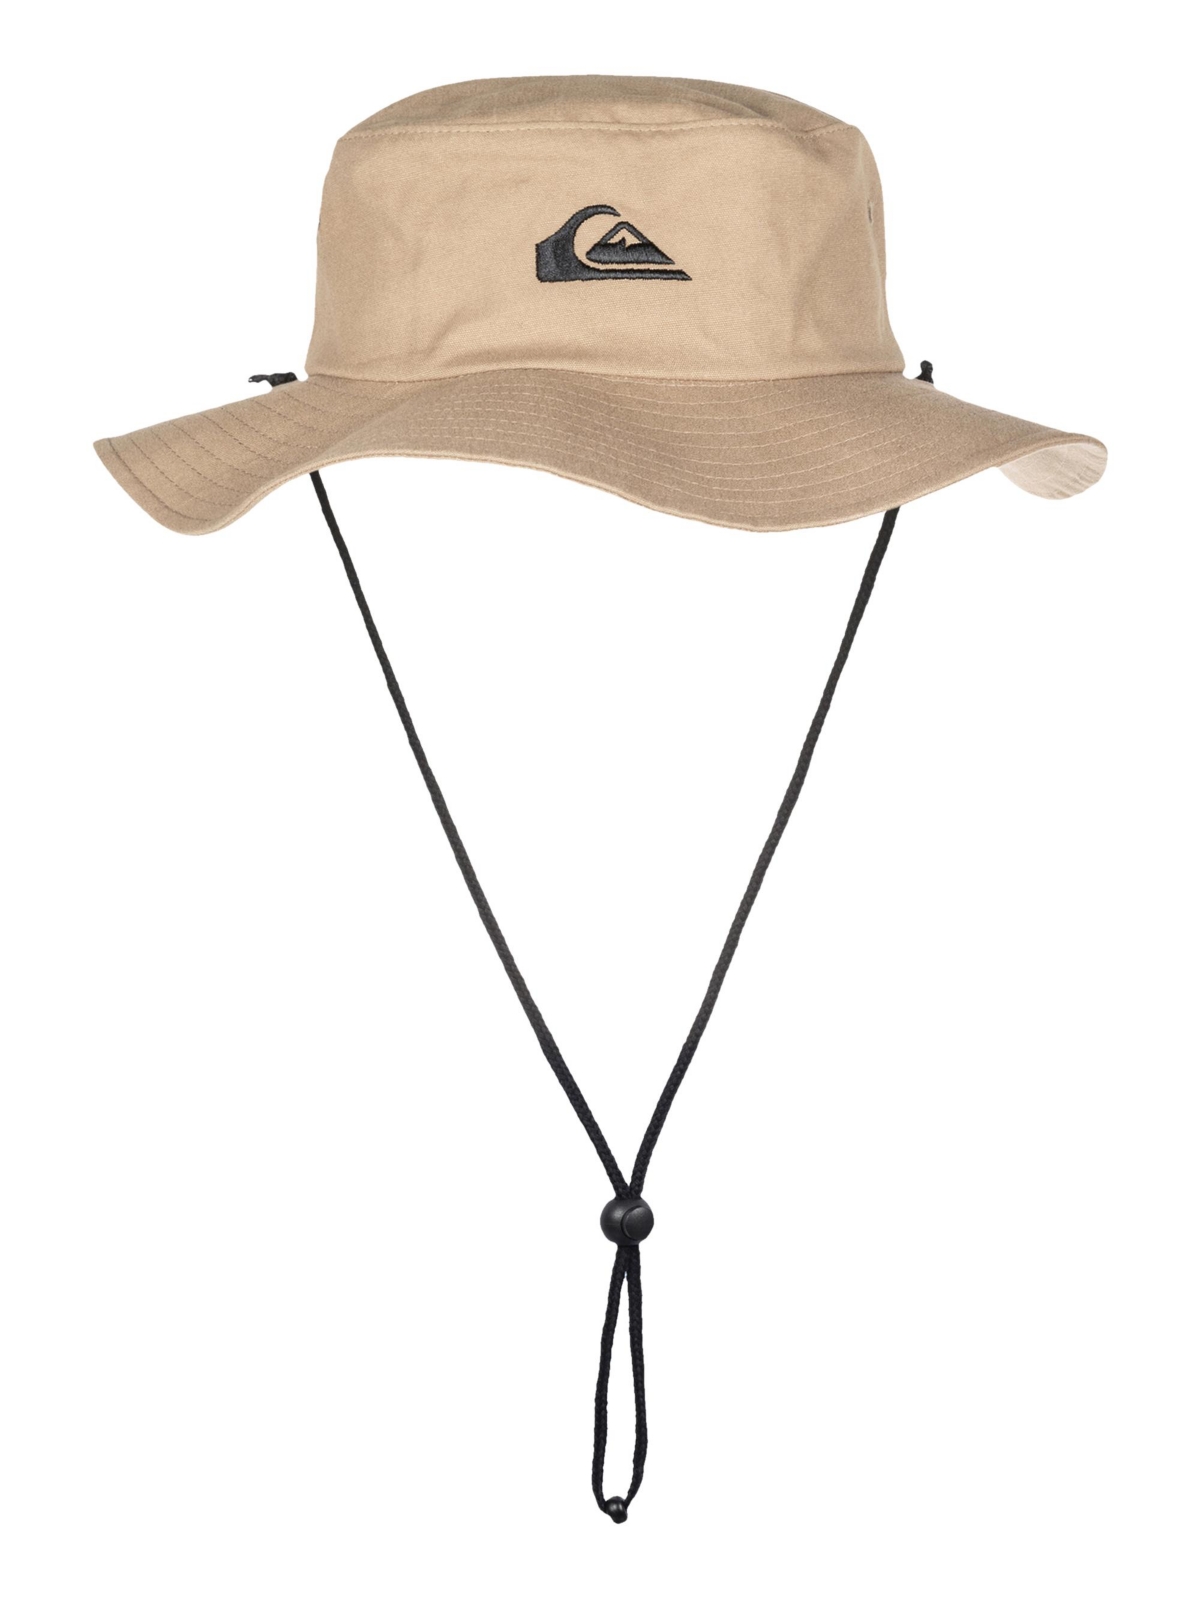 Men's Bushmaster Safari Hat - Khaki